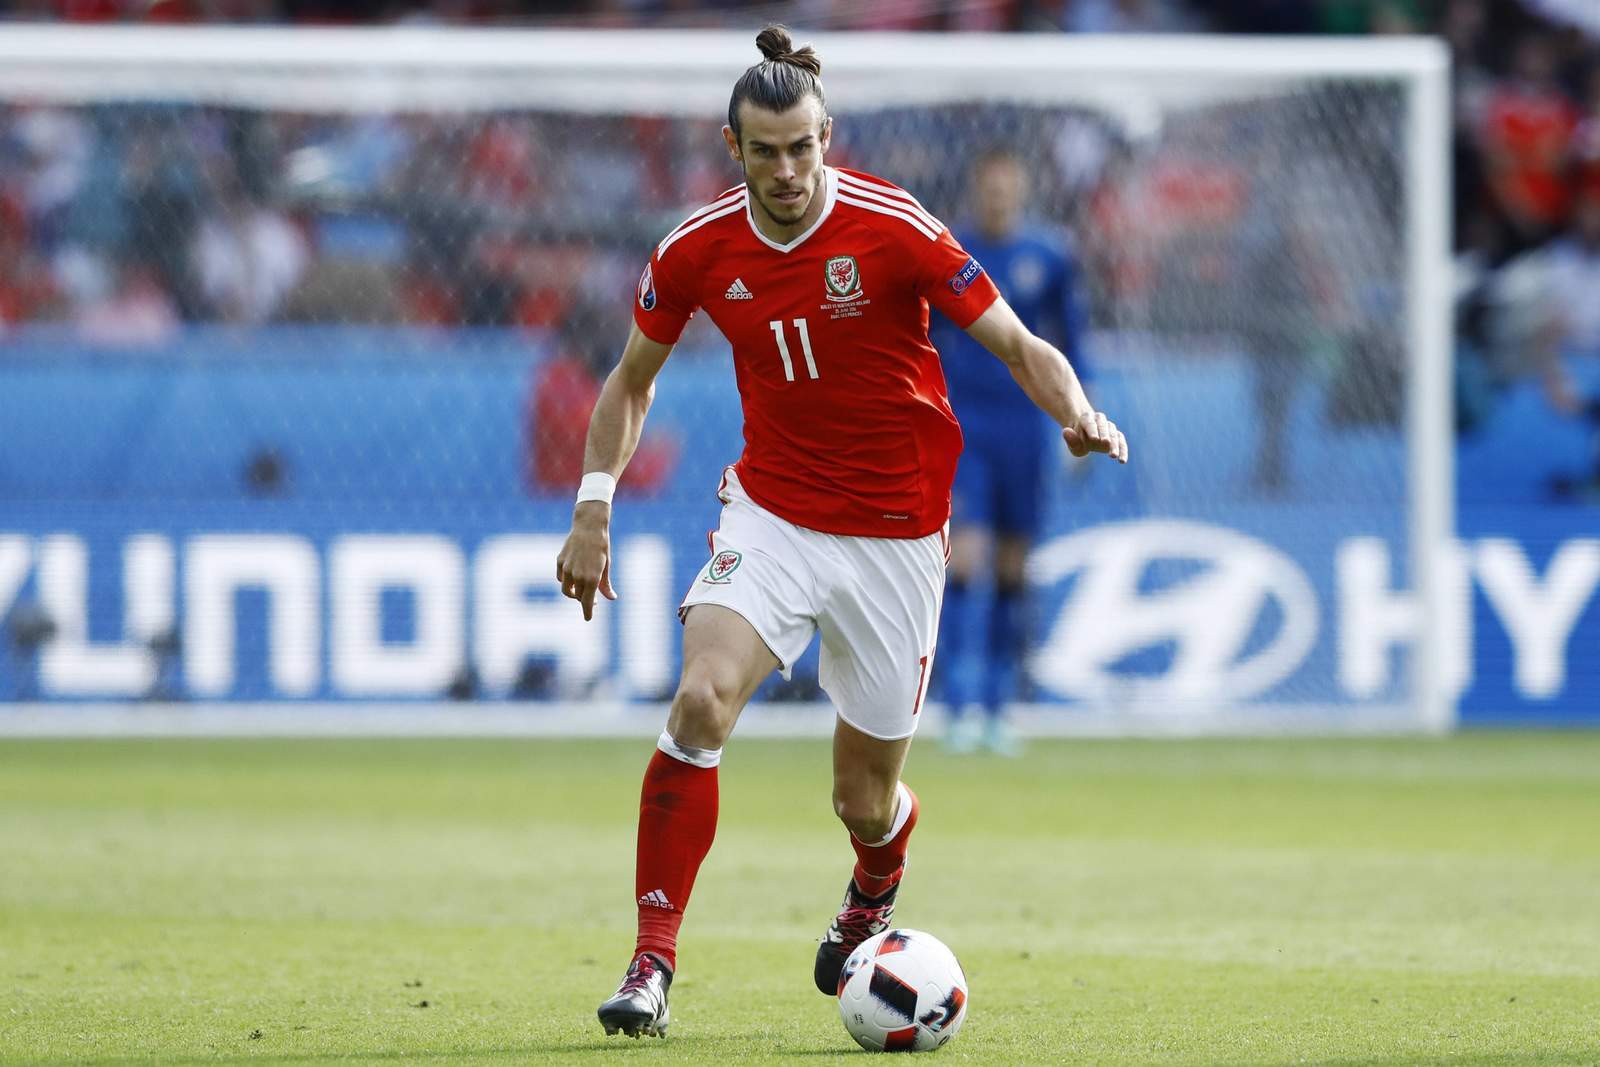 Gareth Bale im Dribbling. Unser Tipp: Belgien gewinnt gegen Wales.